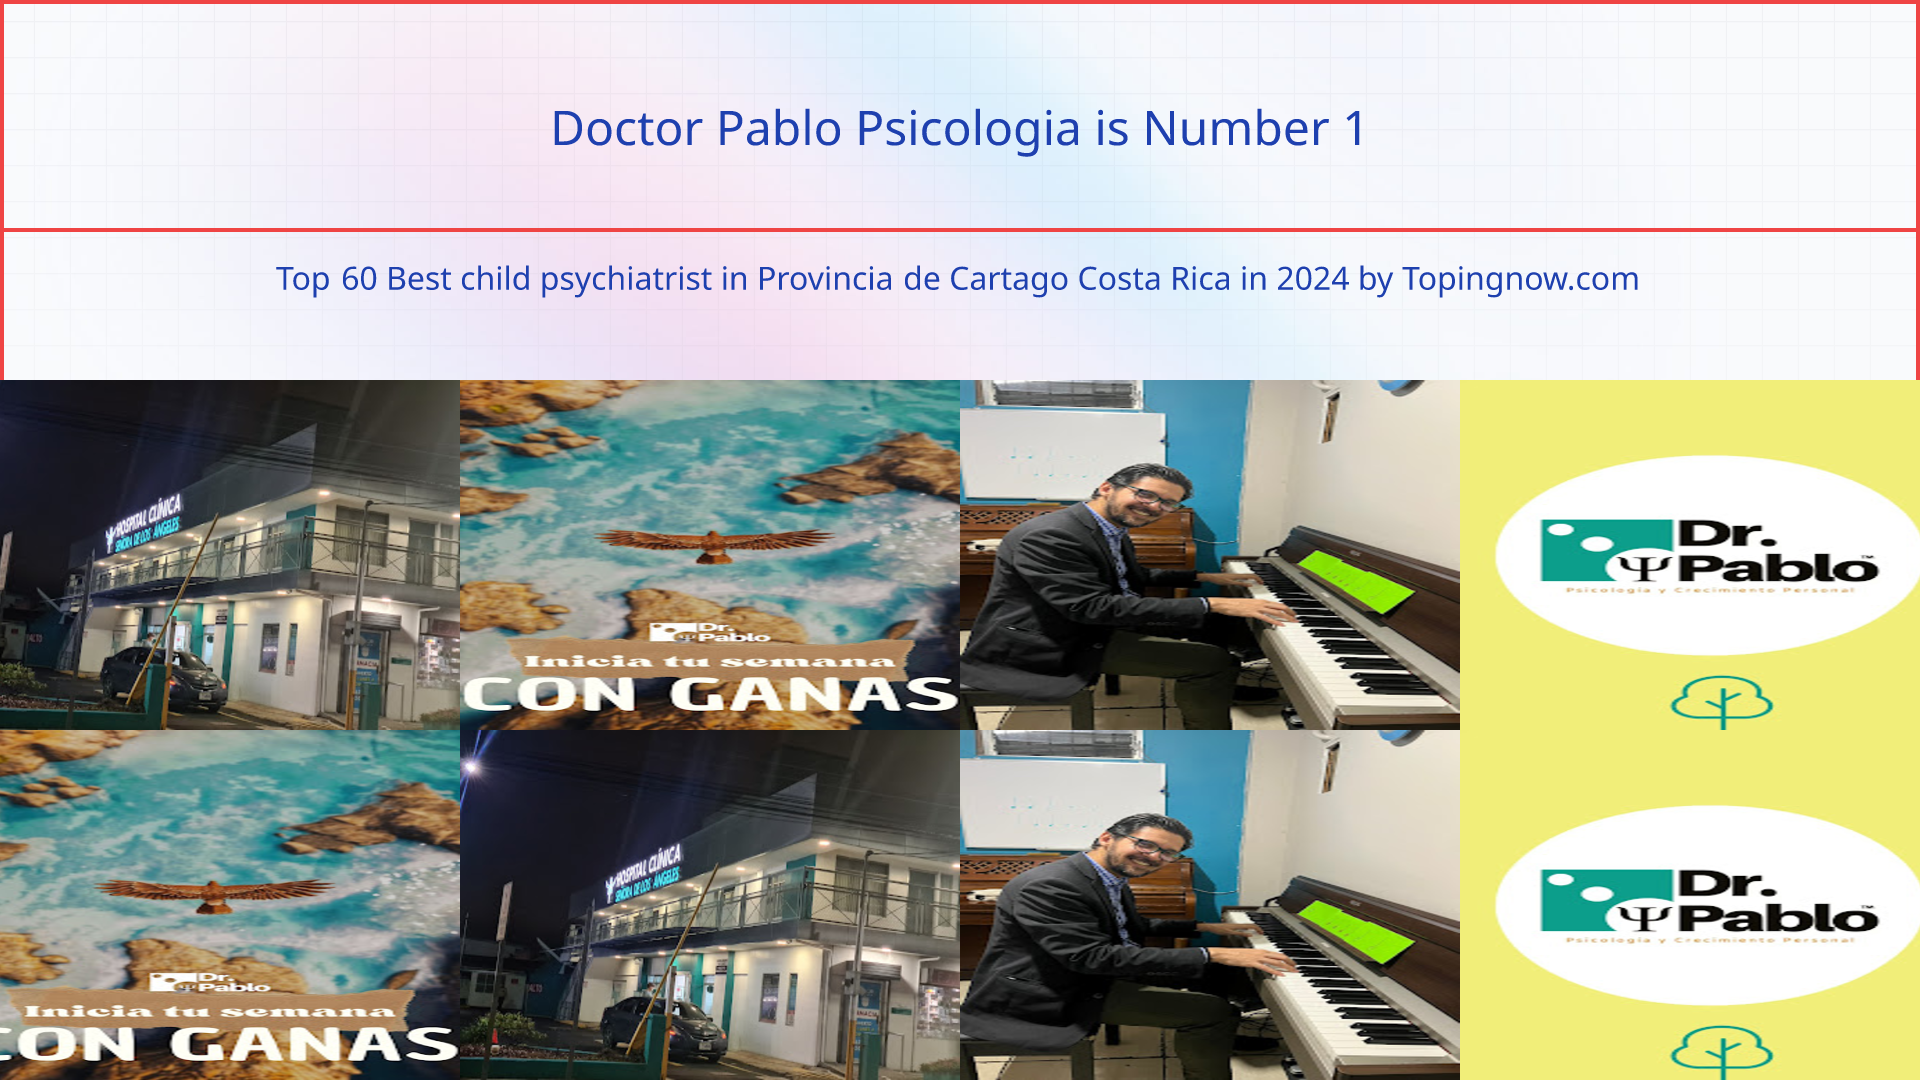 Doctor Pablo Psicologia: Top 60 Best child psychiatrist in Provincia de Cartago Costa Rica in 2024